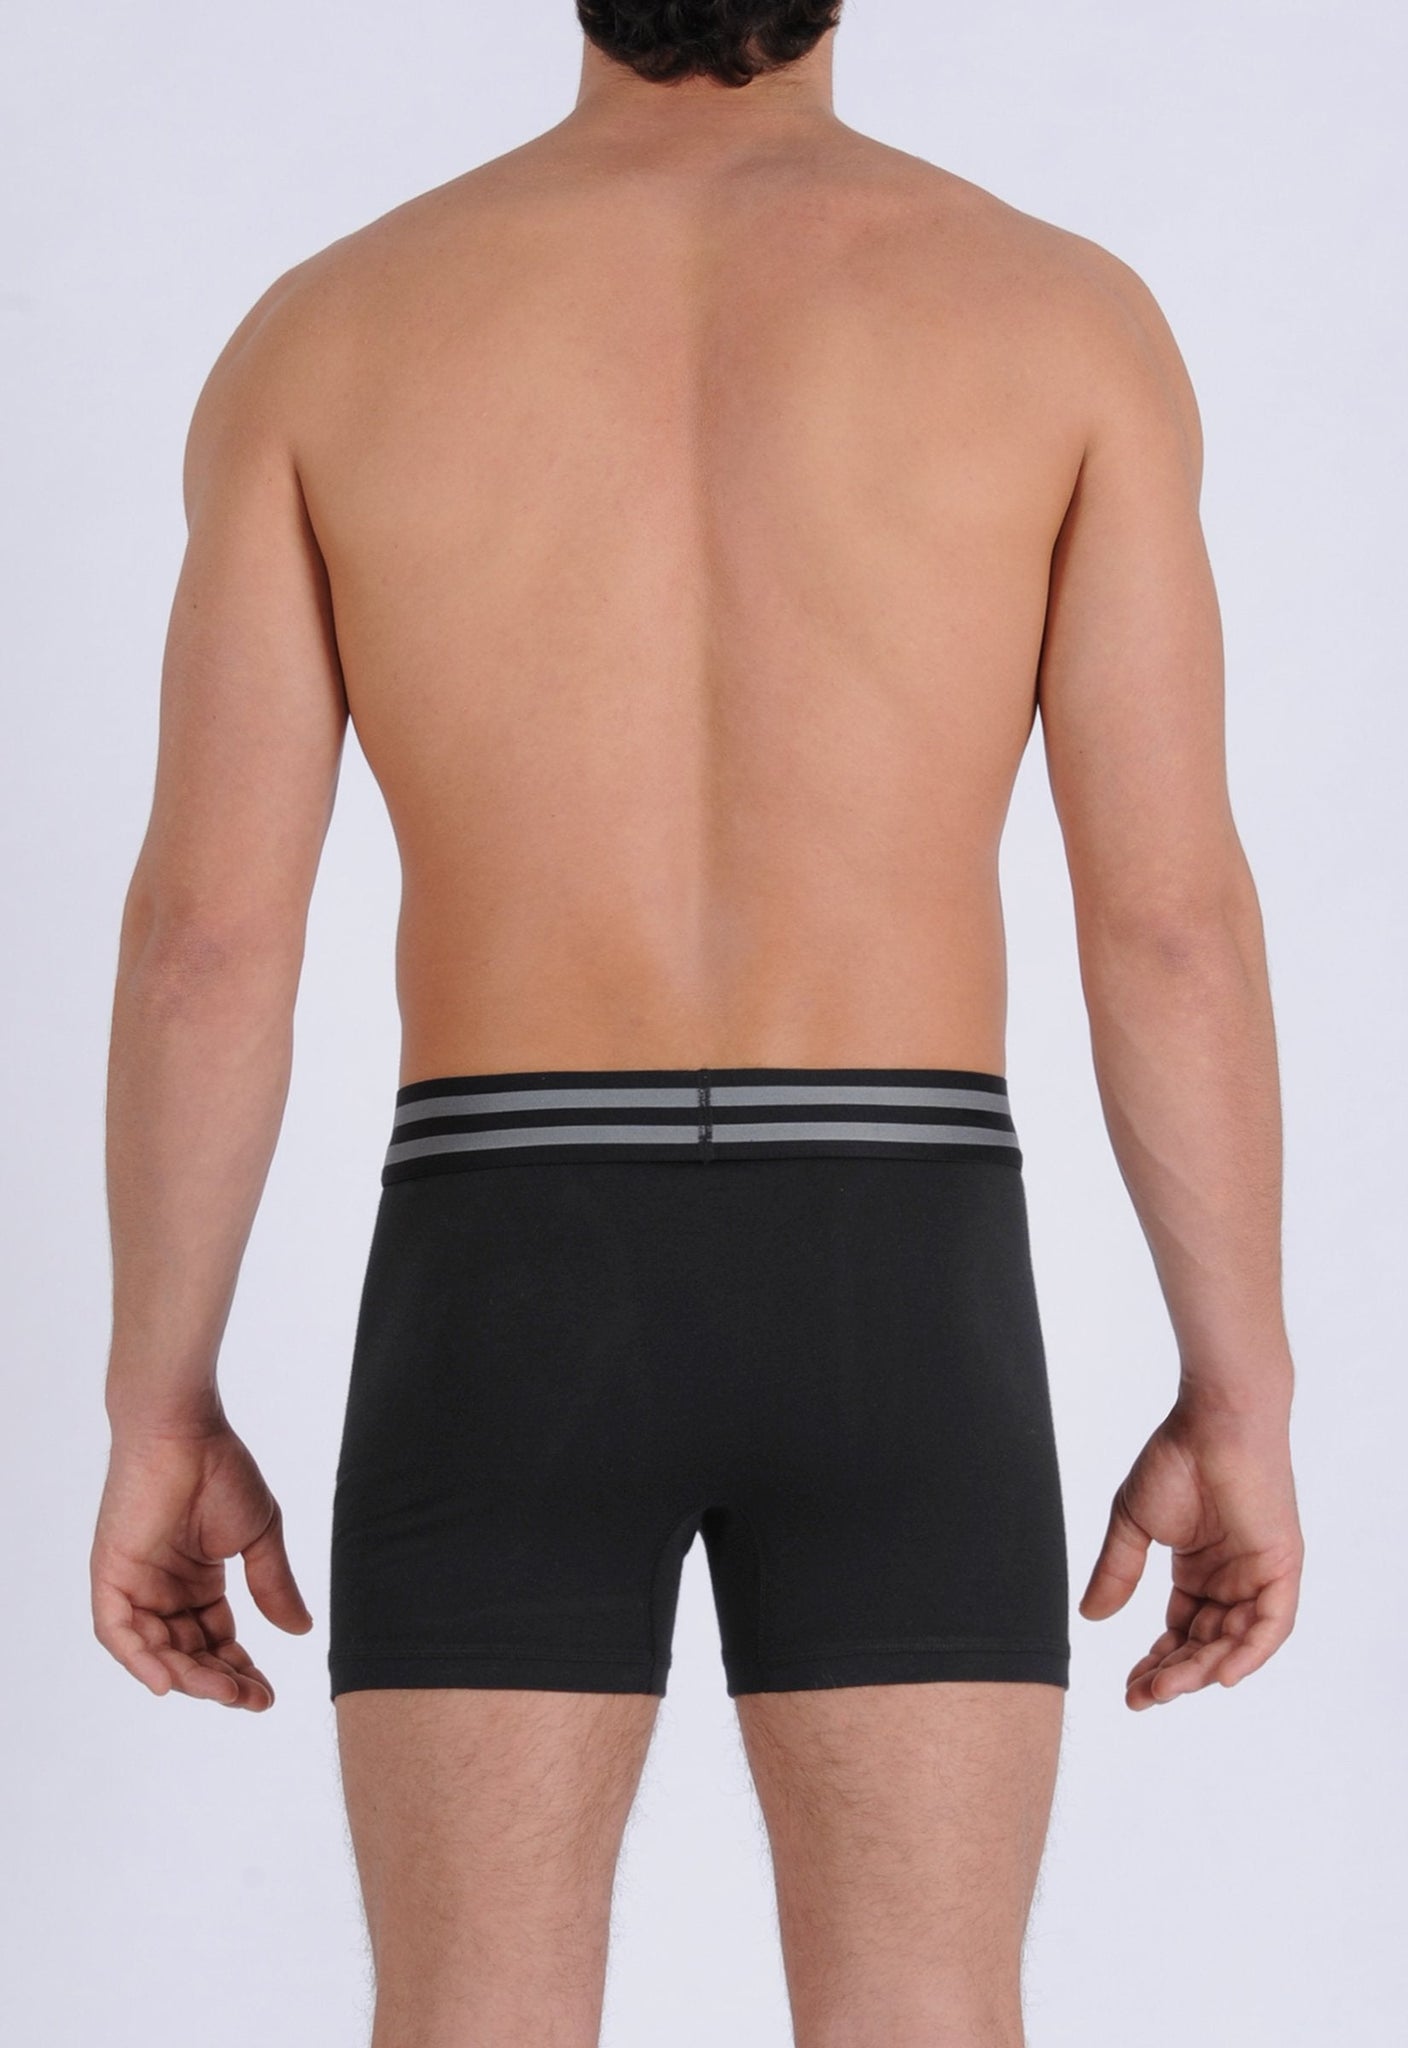 Ginch Gonch Signature Series - Boxer Brief - Black Men's underwear boxer brief trunk printed waistband back